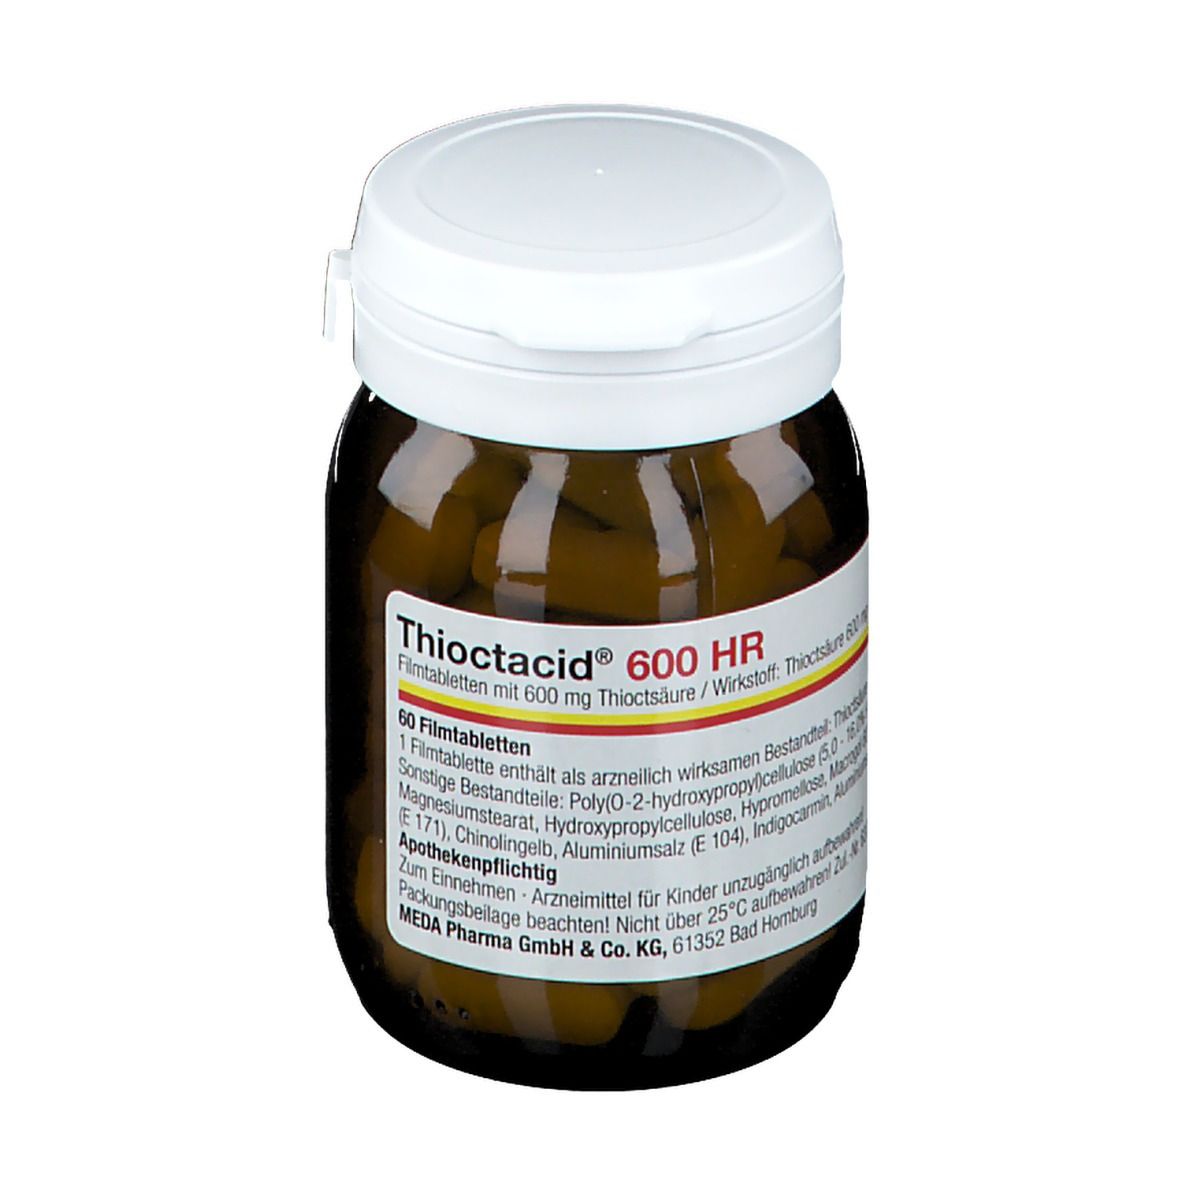 Thioctacid® 600 HR